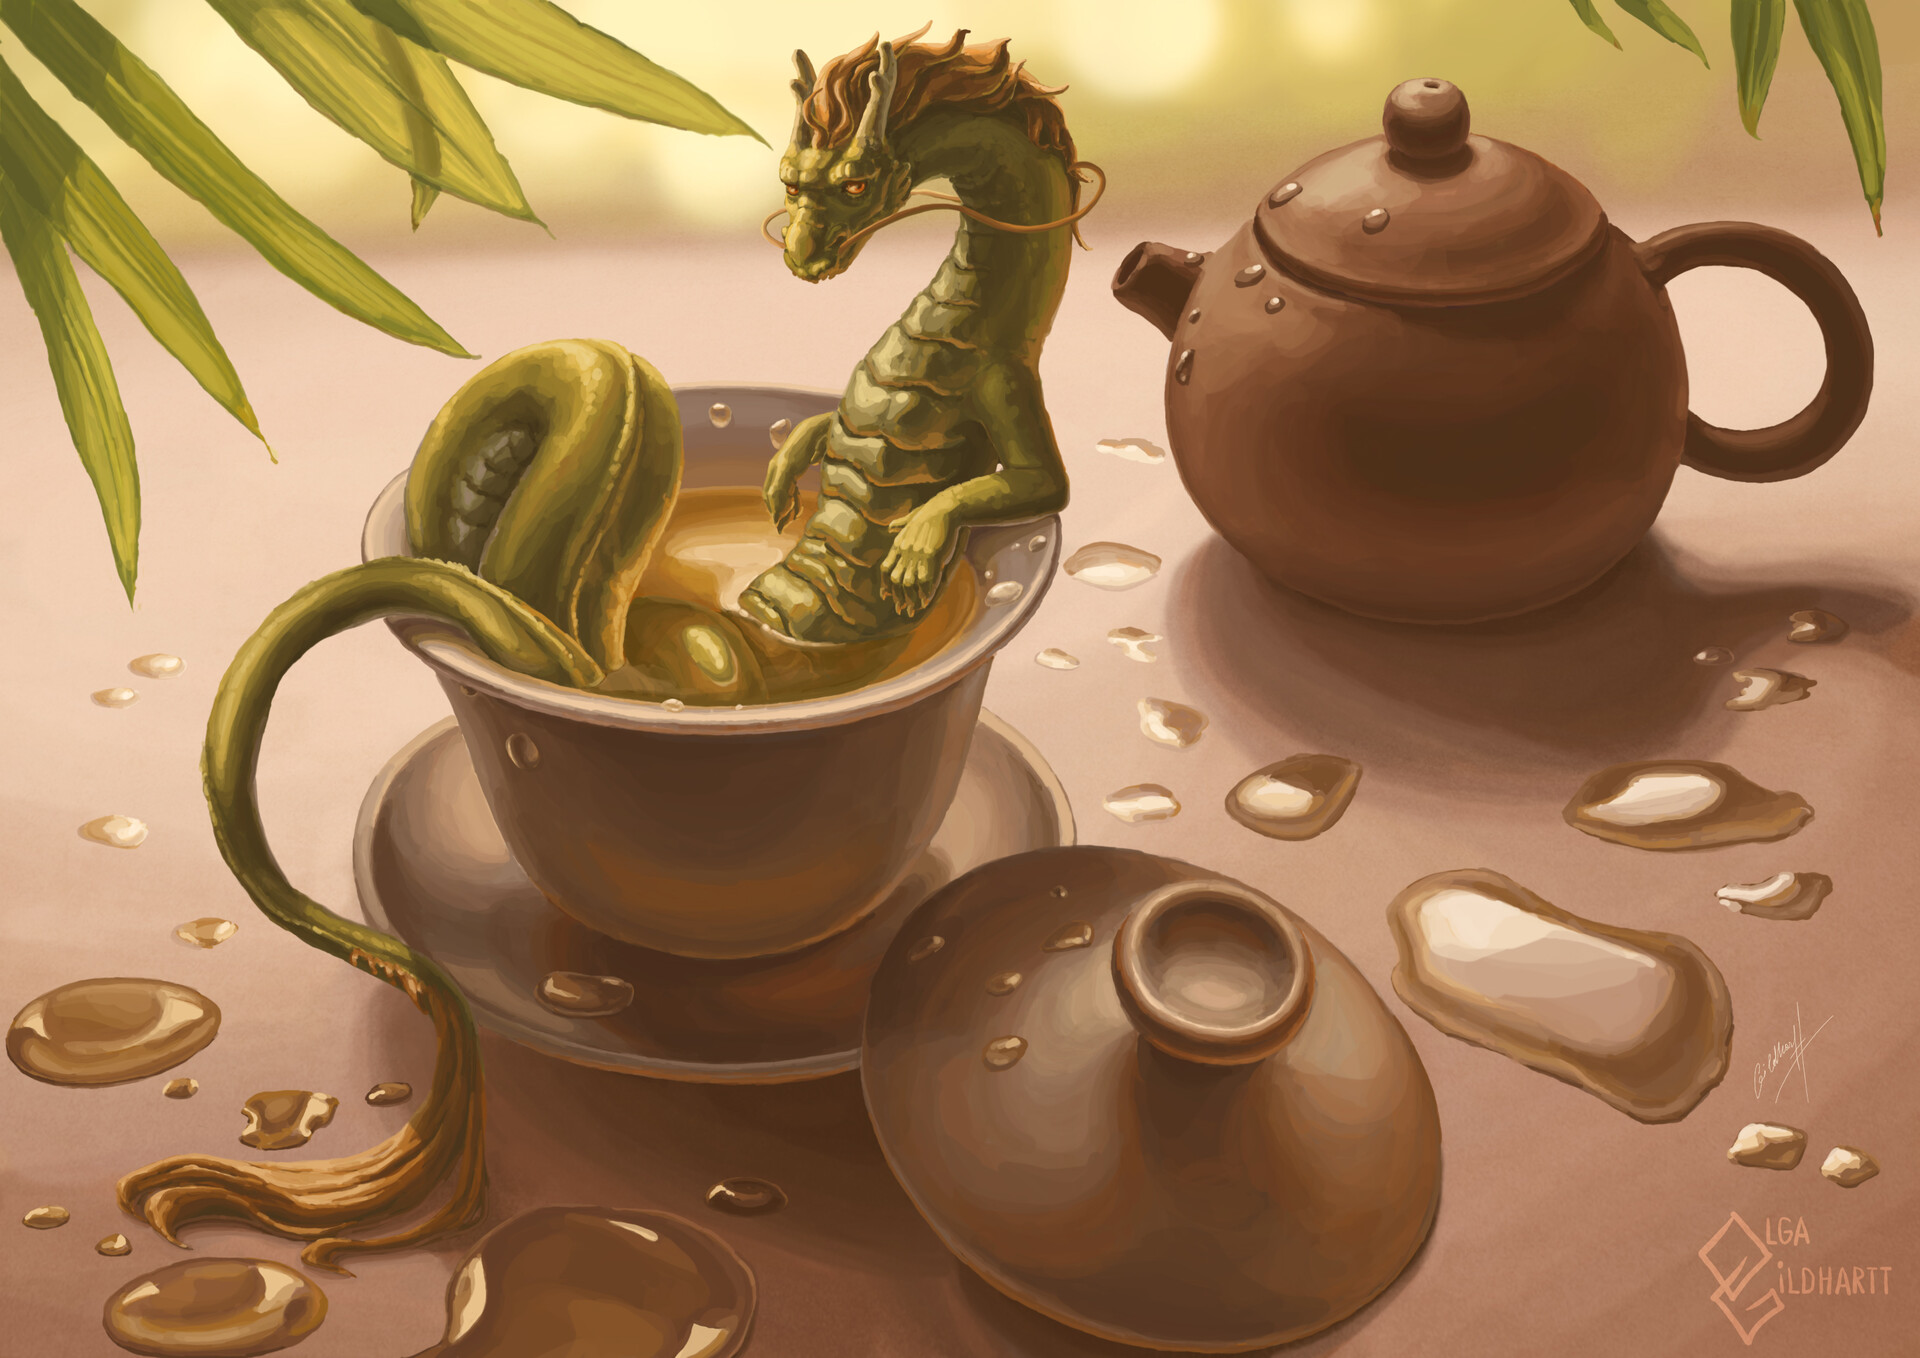 Дракон обед. Чай дракон. Дракон с чаем. Дракончик с чаем. Чай арт.